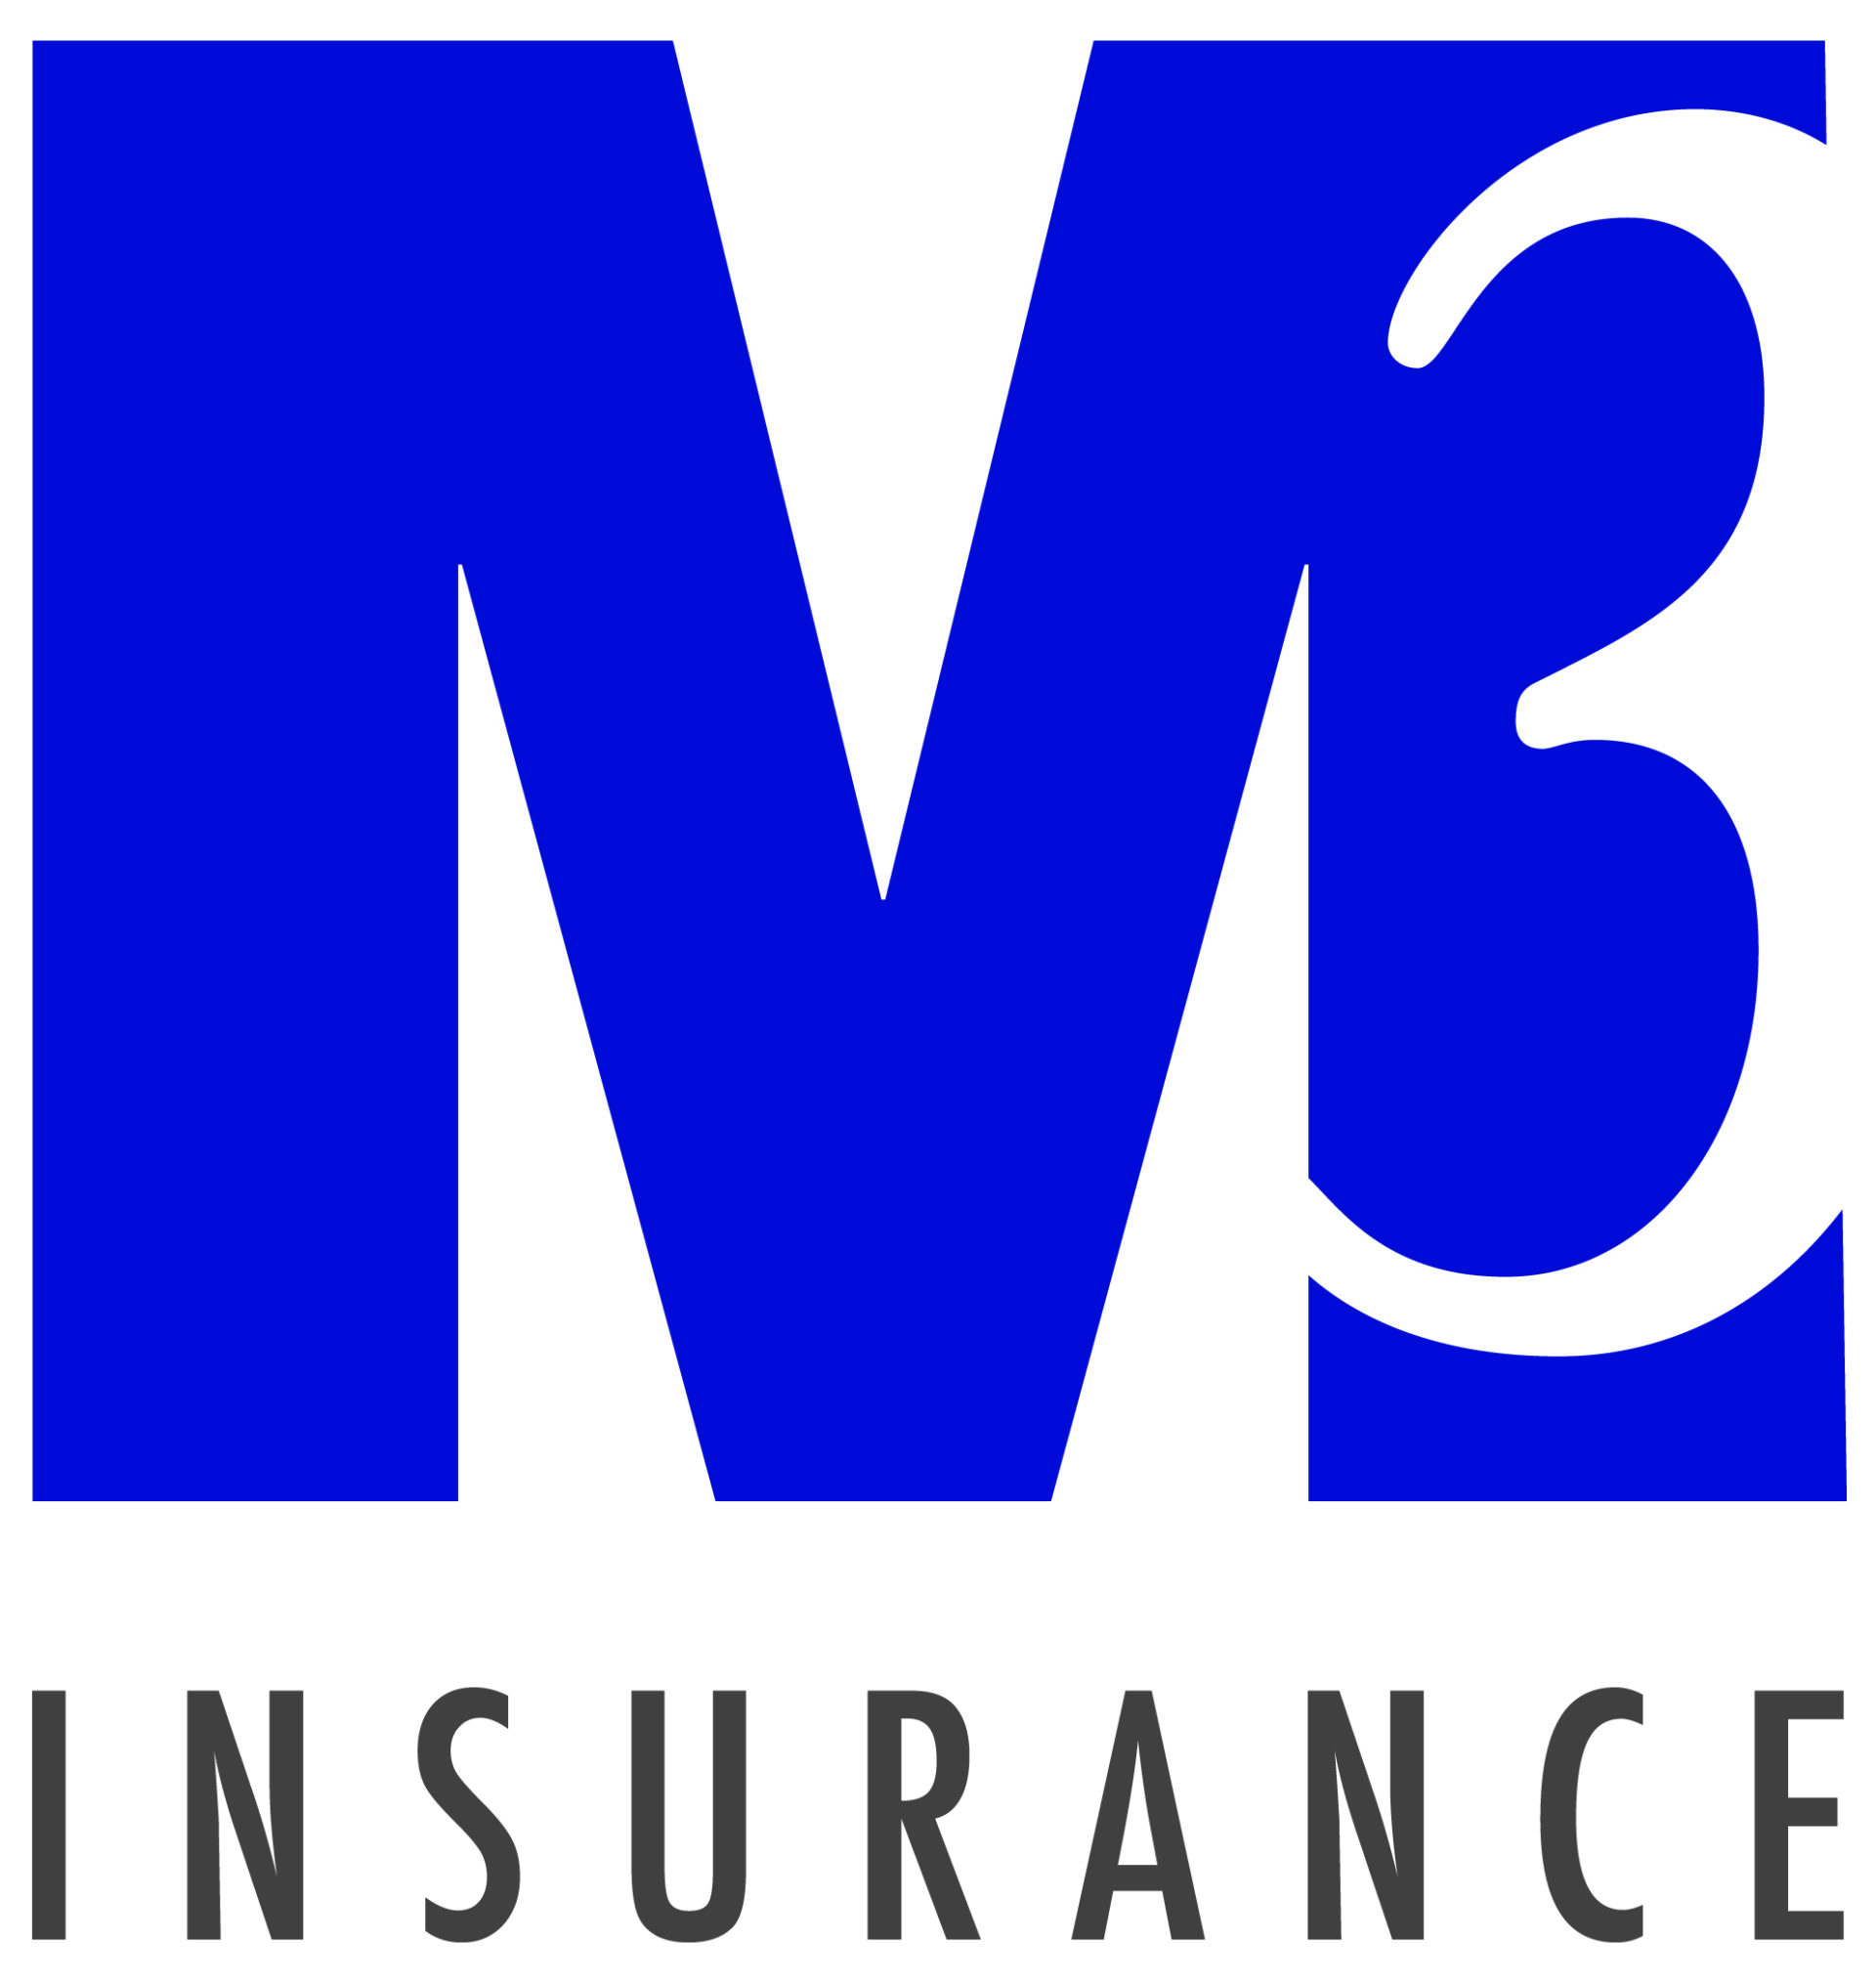 M3 Insurance logo